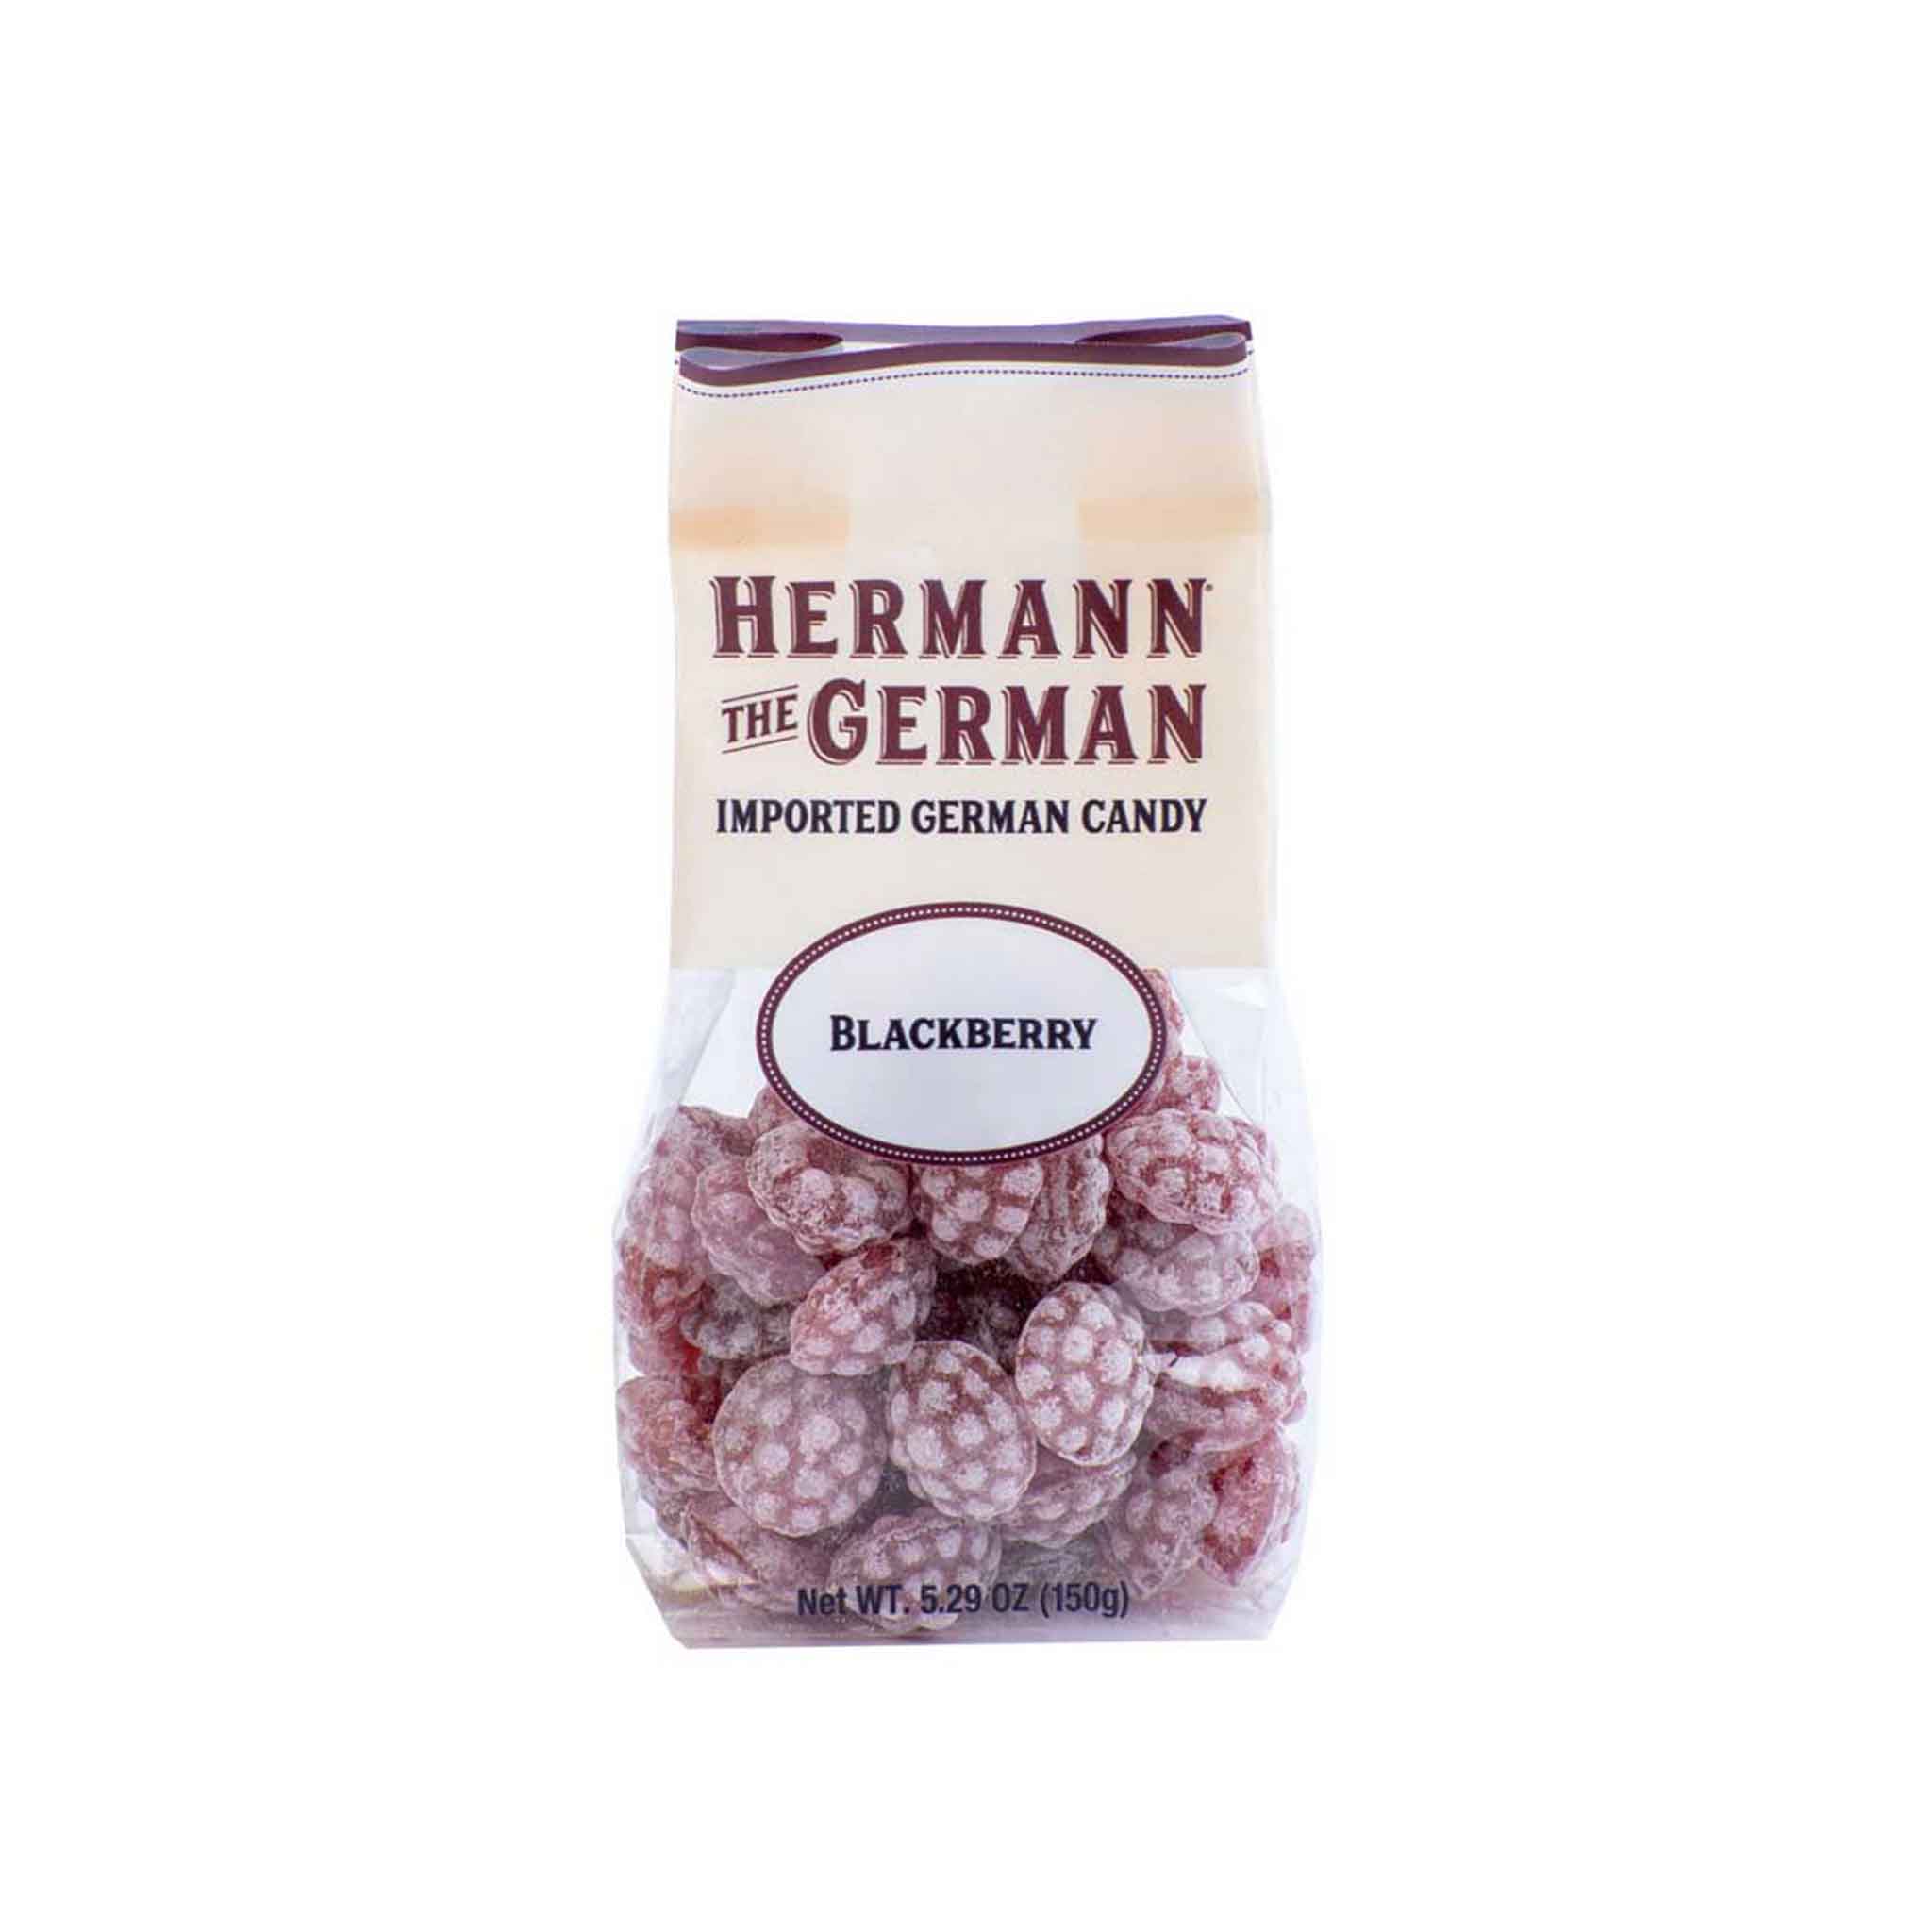 HERMANN THE GERMAN BLACKBERRY CANDY 150g